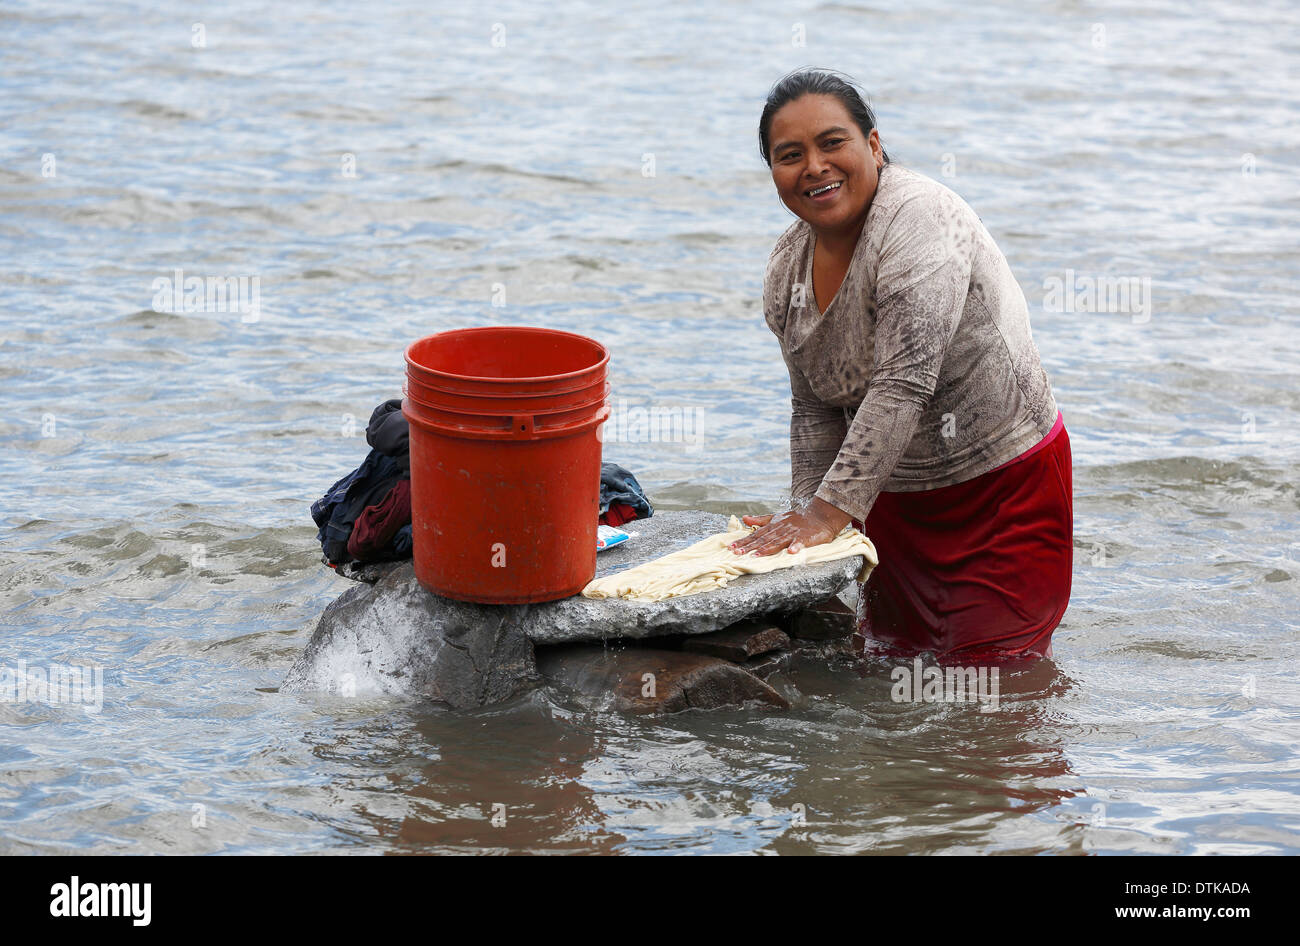 Woman hand washing clothes, Lago de Apanas, Nicaragua Stock Photo